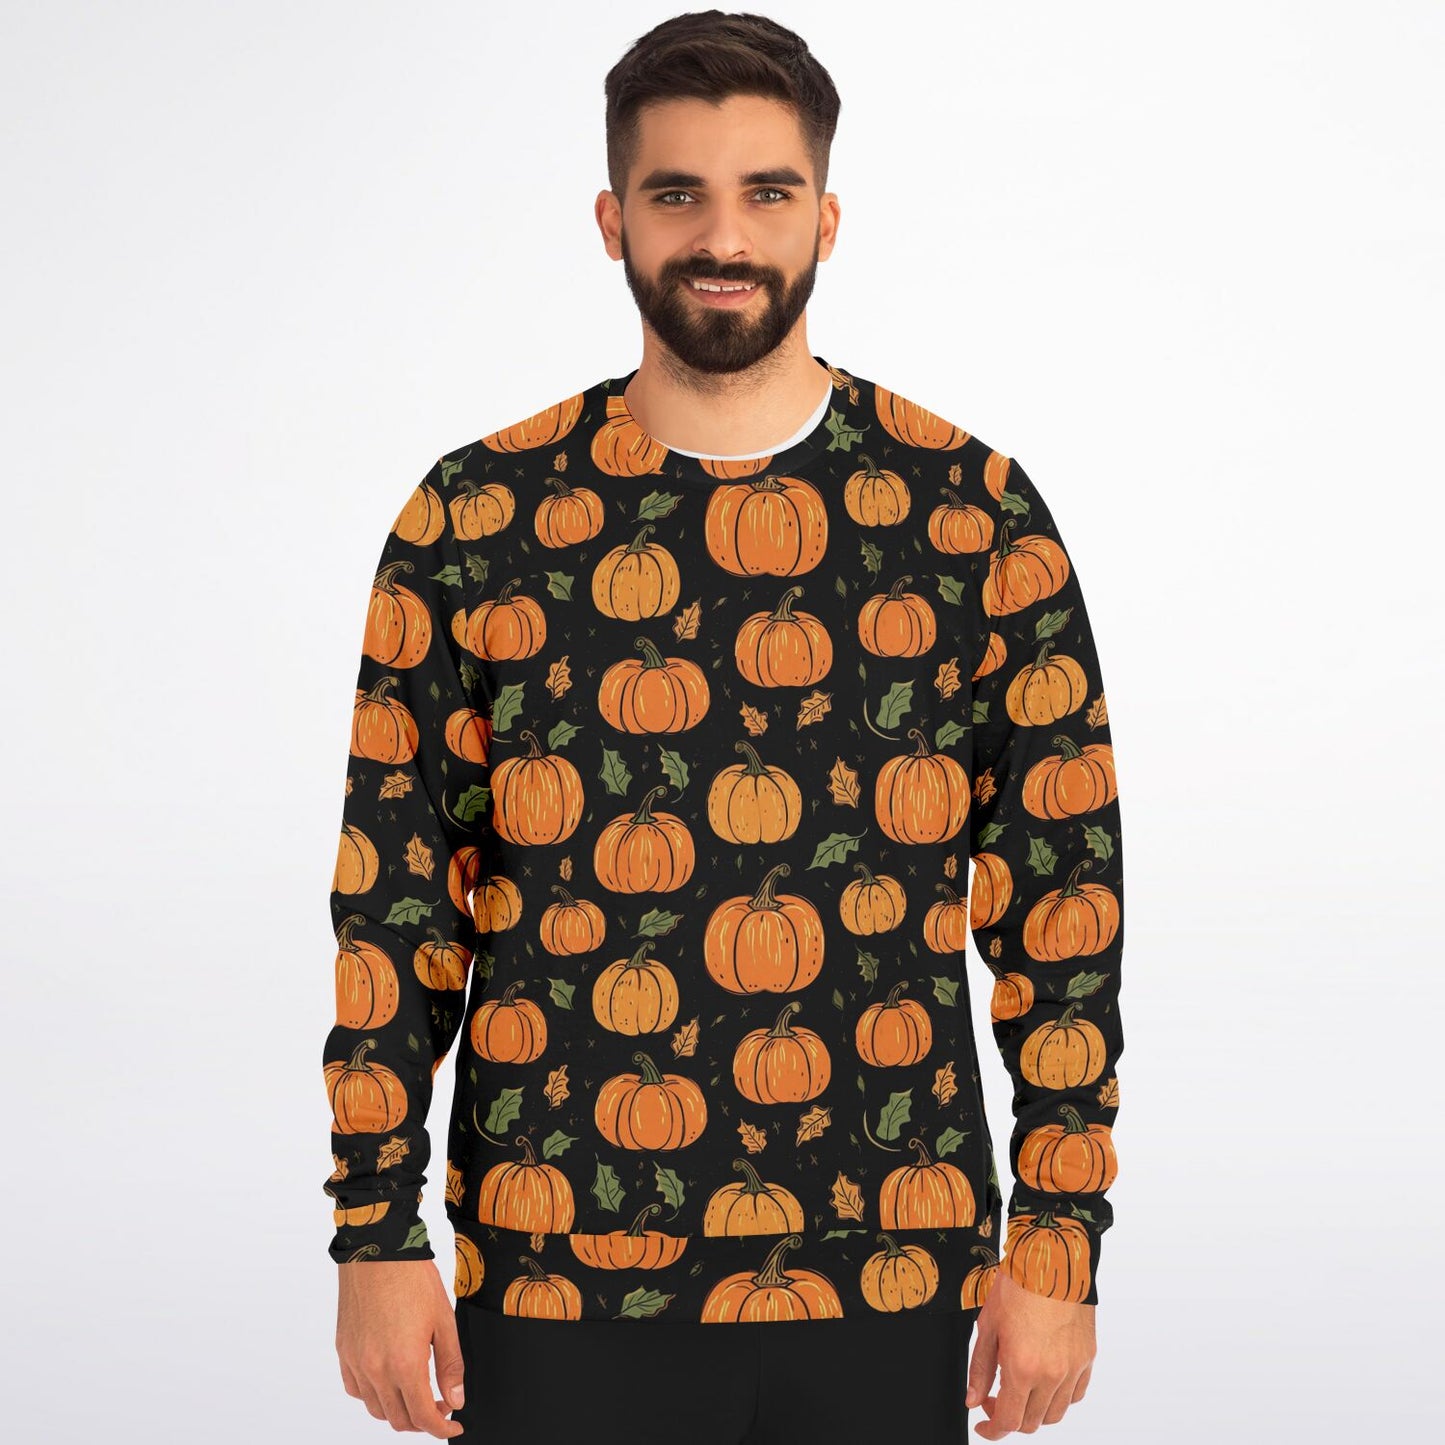 Pumpkins Sweatshirt, Fall Autumn Leaves Halloween Graphic Crewneck Cotton Sweater Jumper Pullover Men Women Adult Aesthetic Designer Top